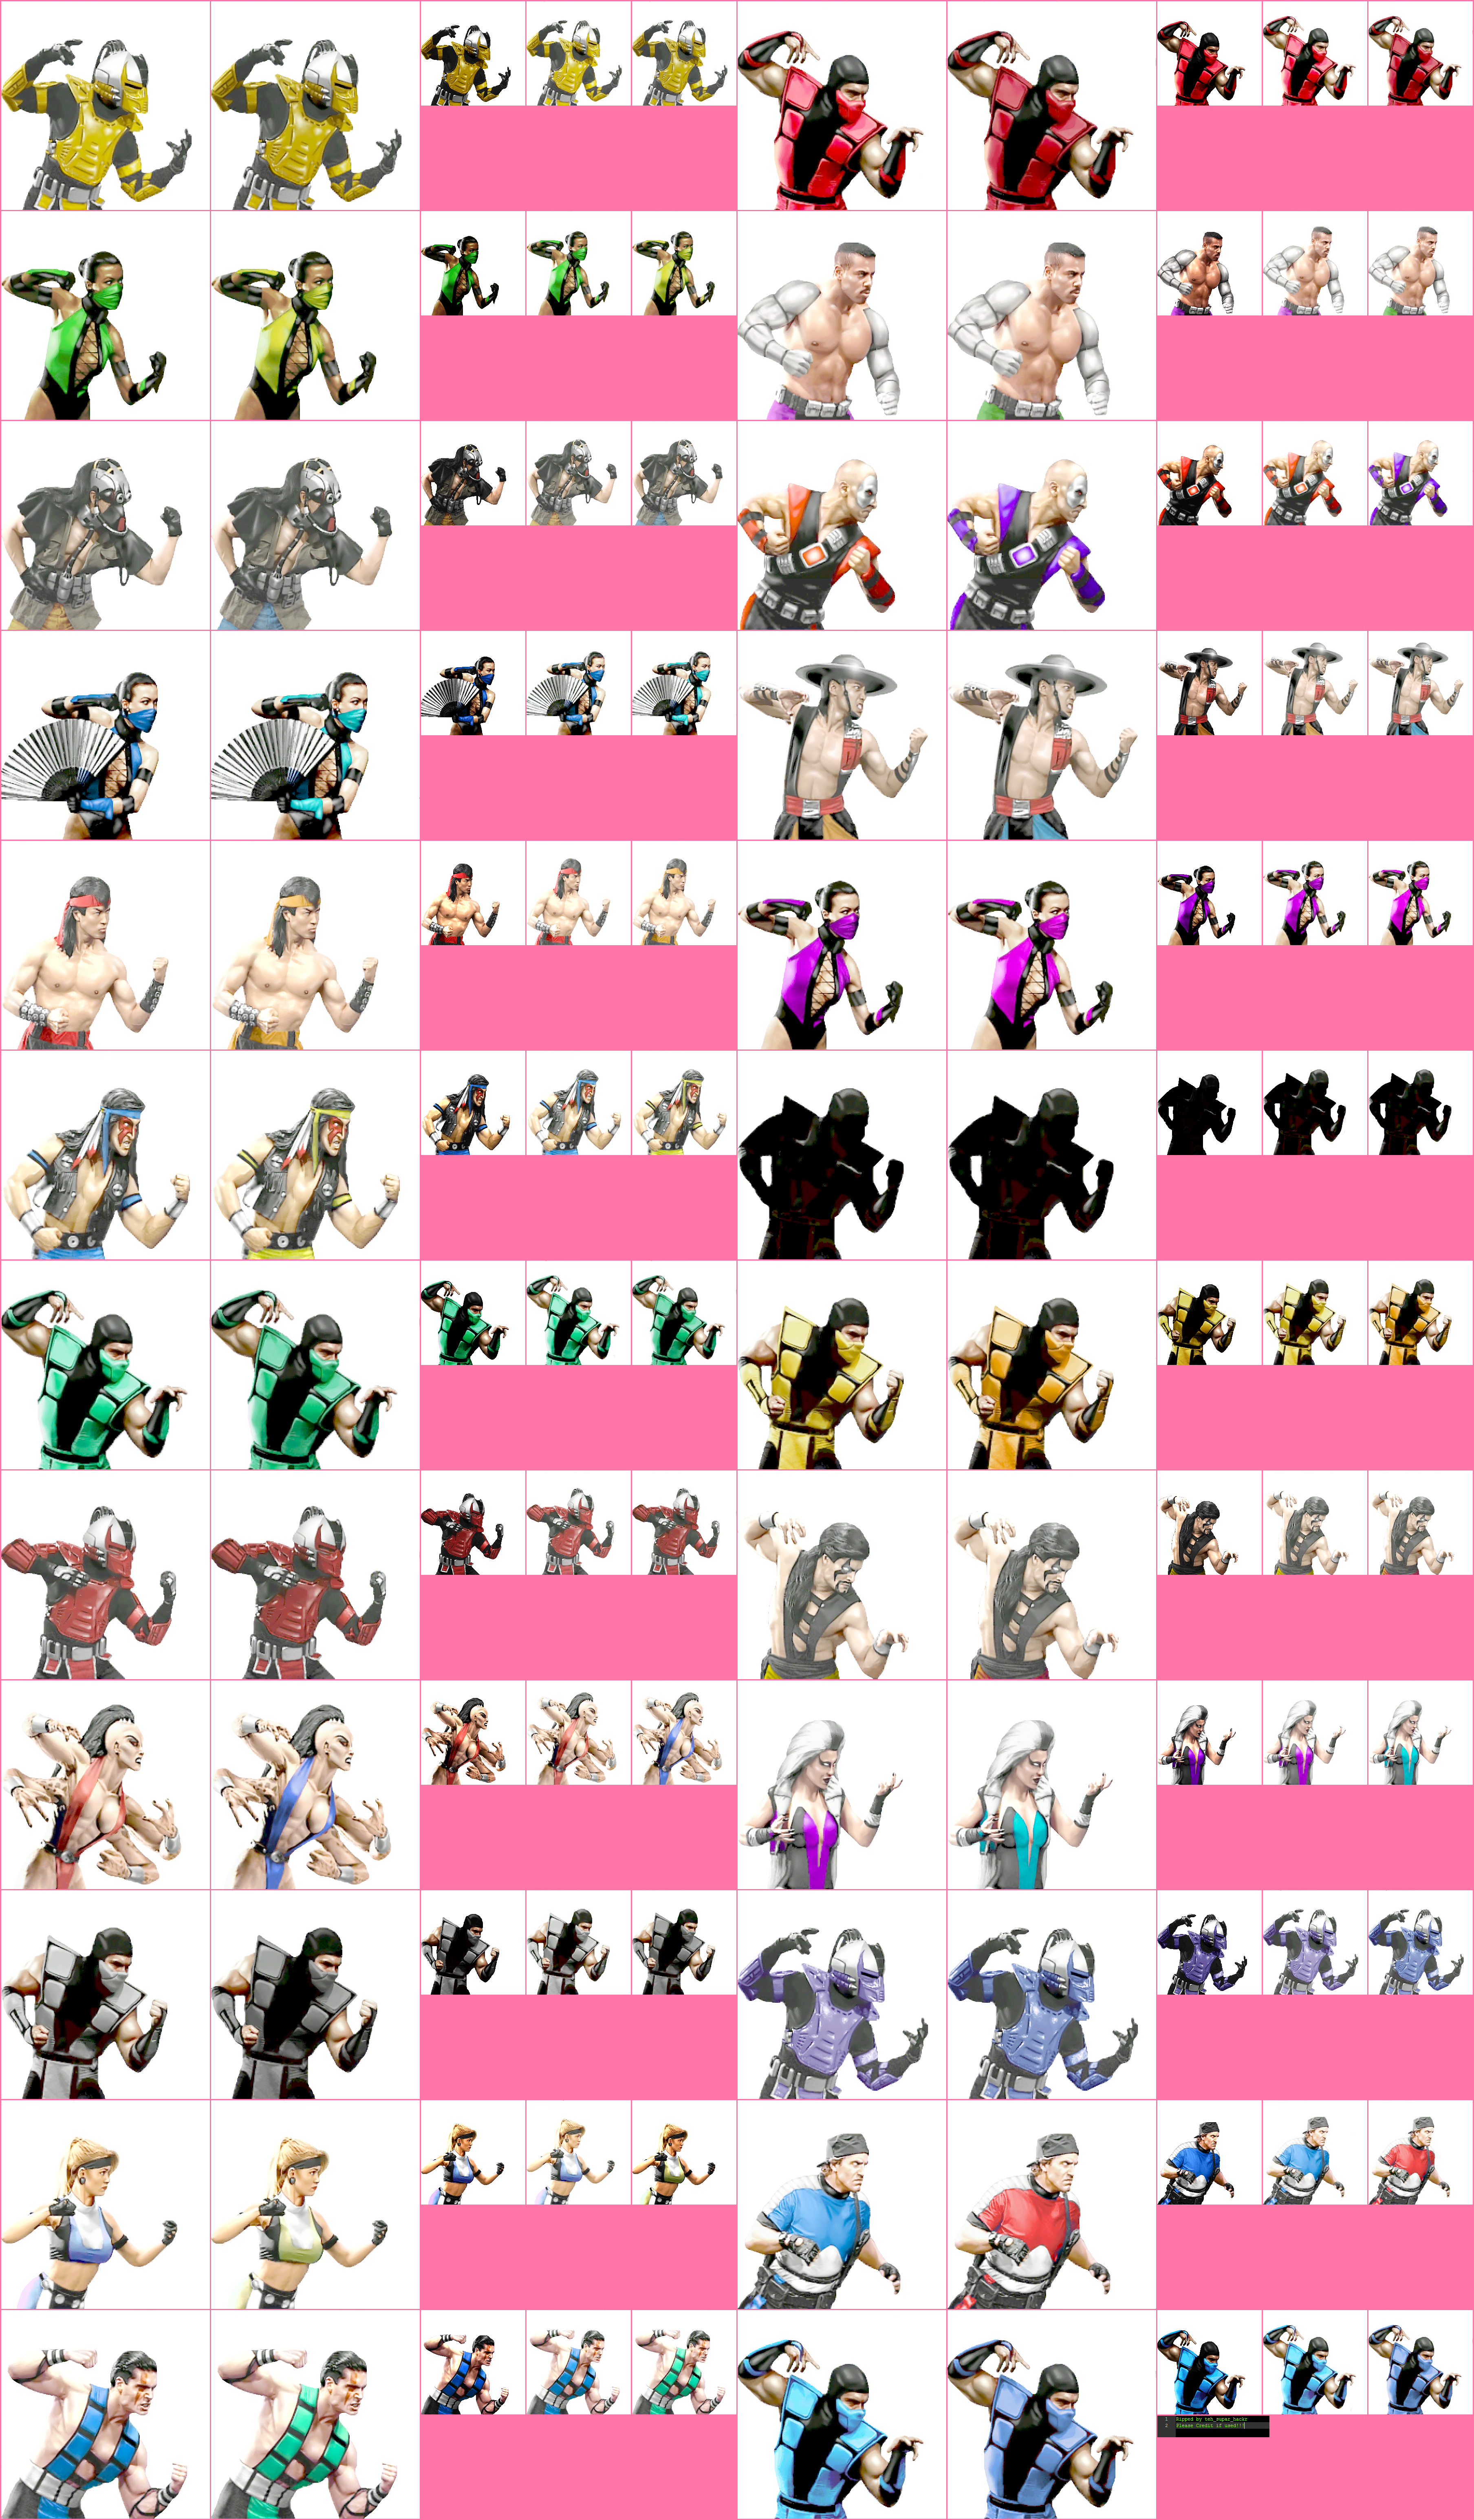 Ultimate Mortal Kombat 3 (iOS) - VS Fighter Portraits